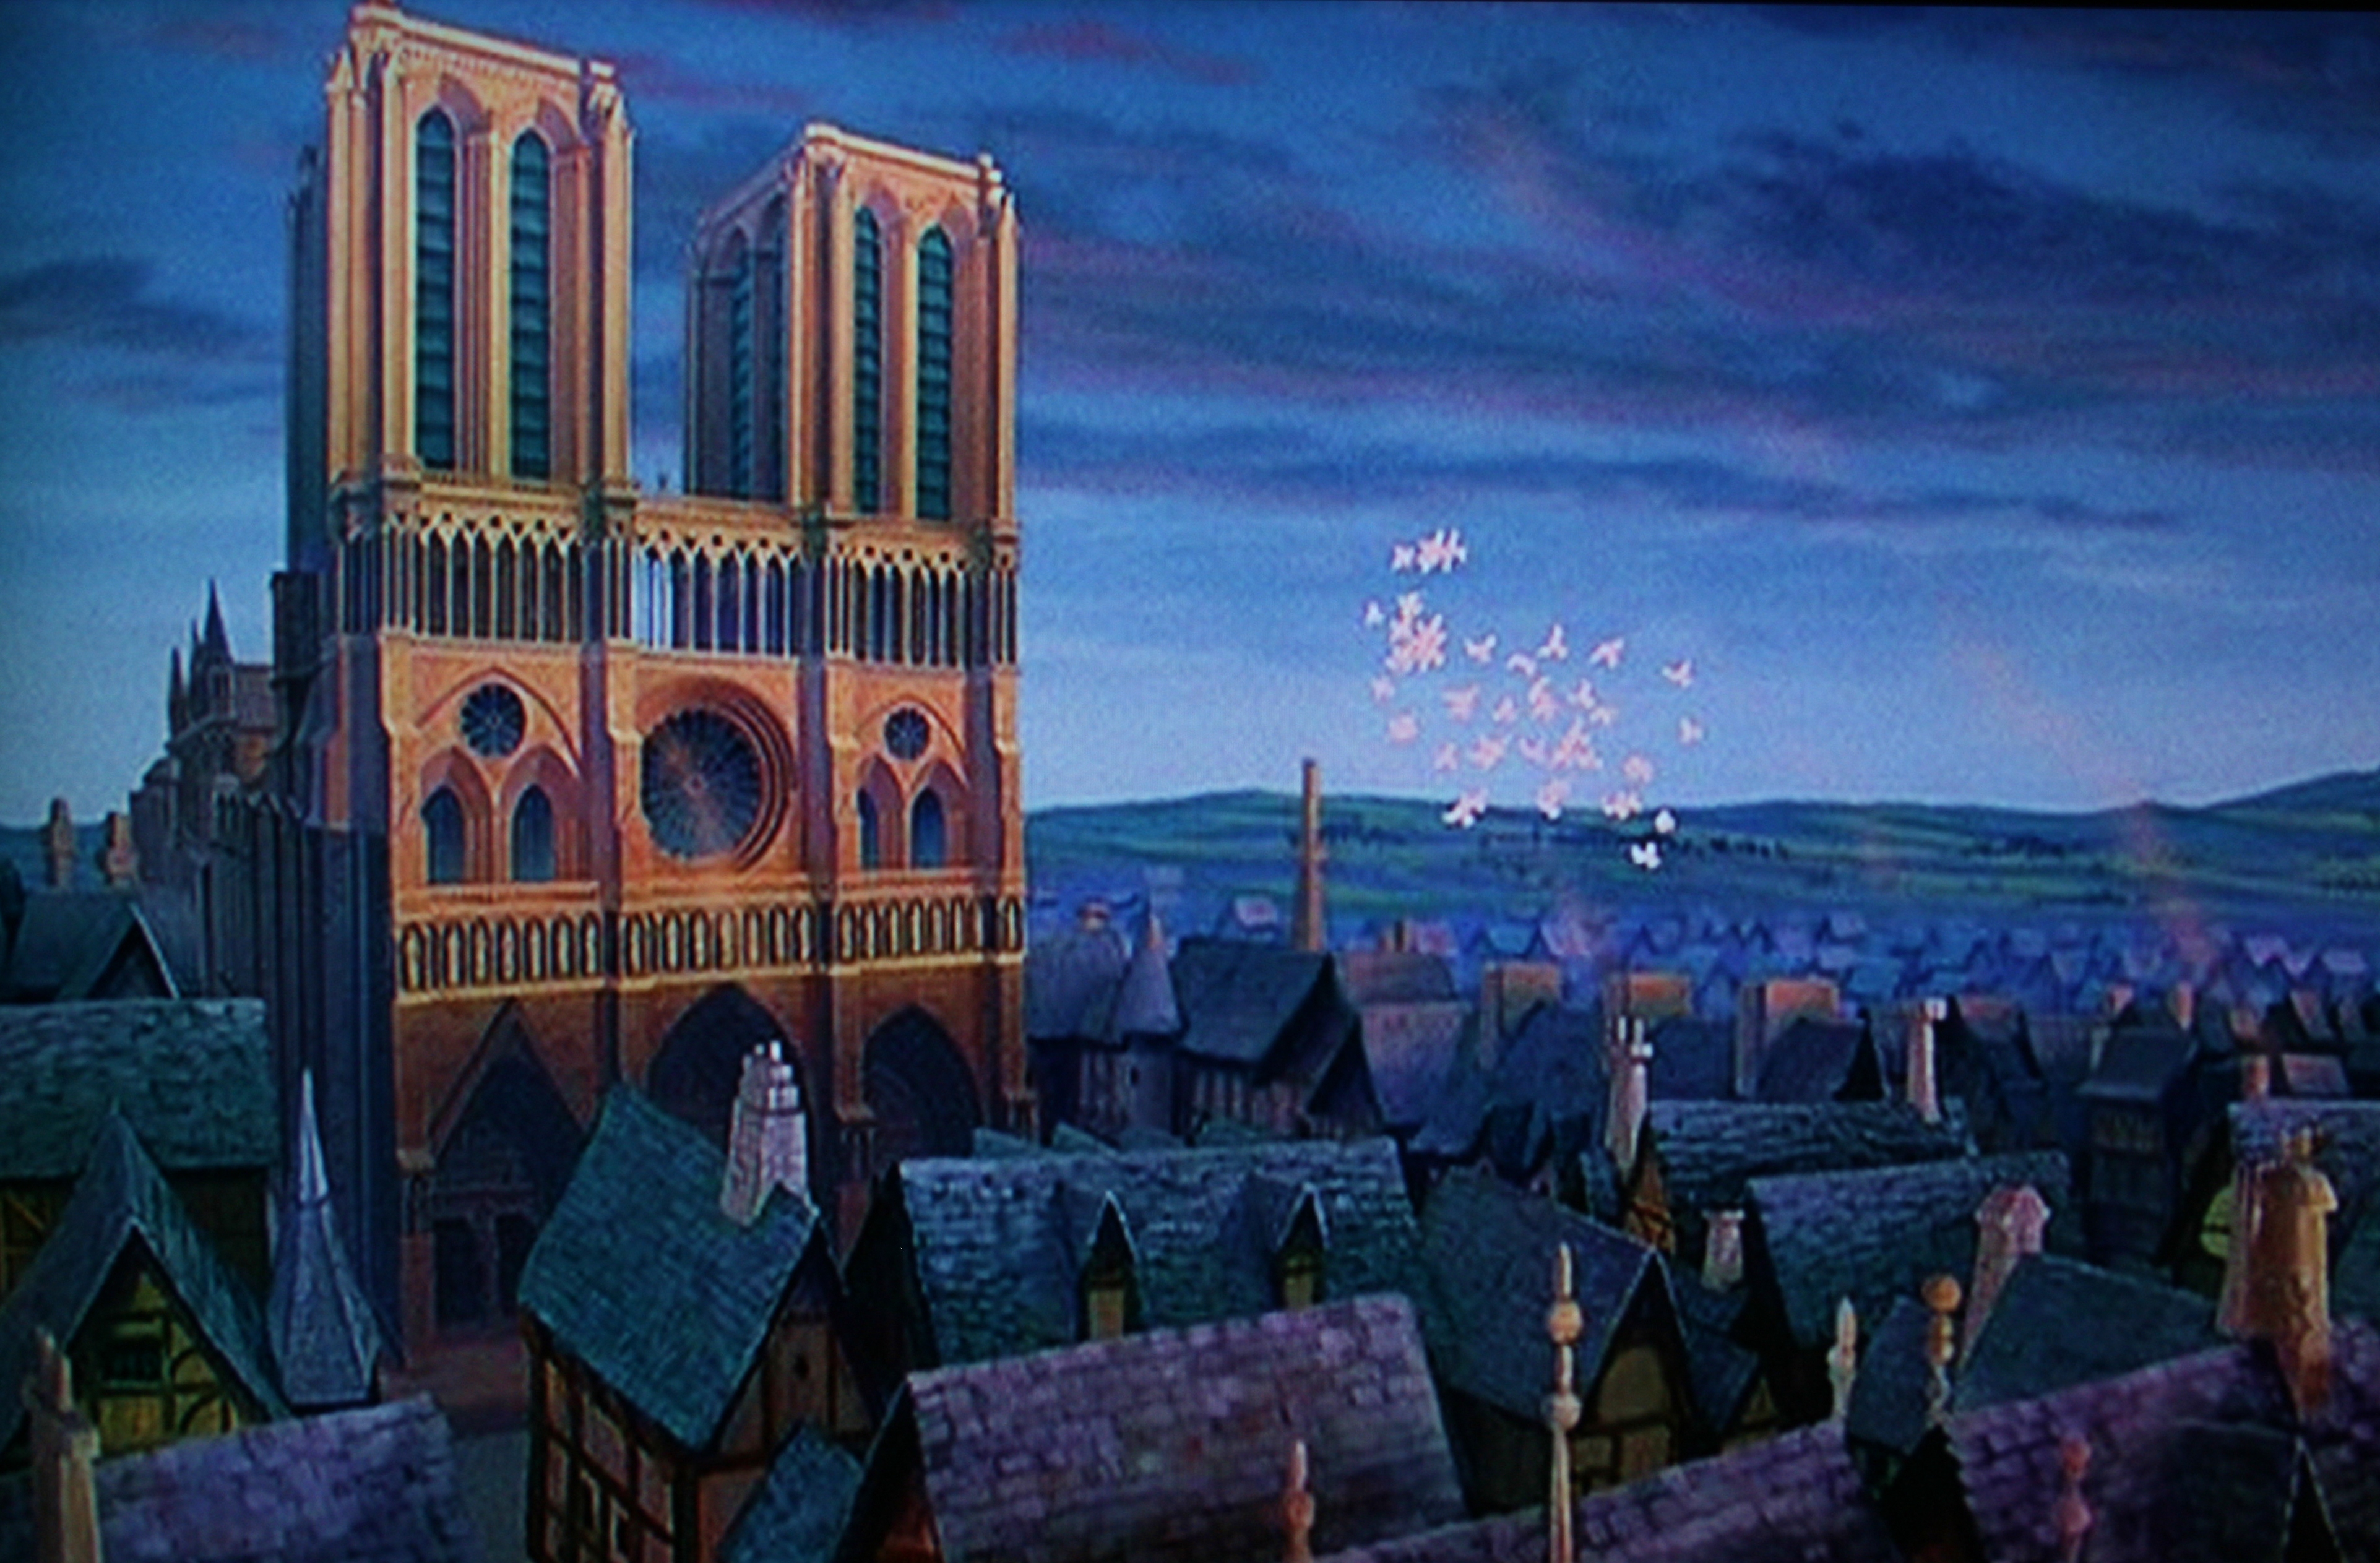 Image - Hunchback of Notre Dame, The 004.JPG - DisneyWiki